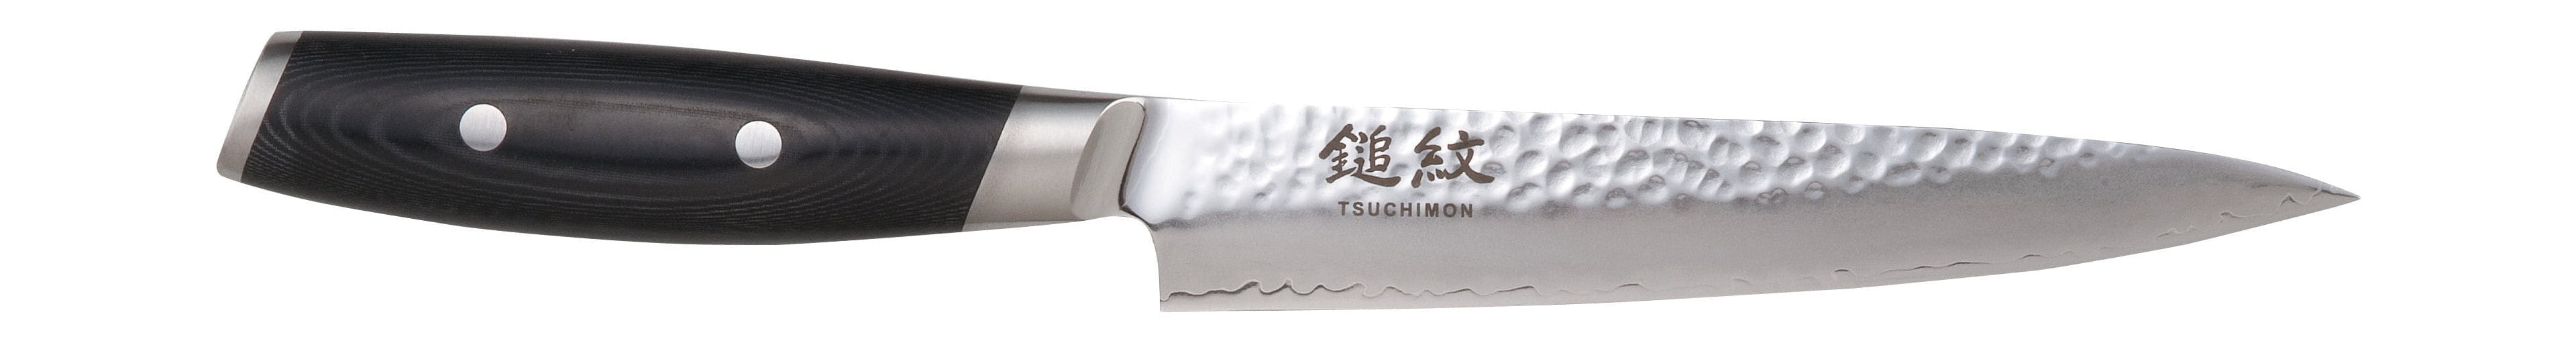 Yaxell Tsuchimon snidkniv, 18 cm